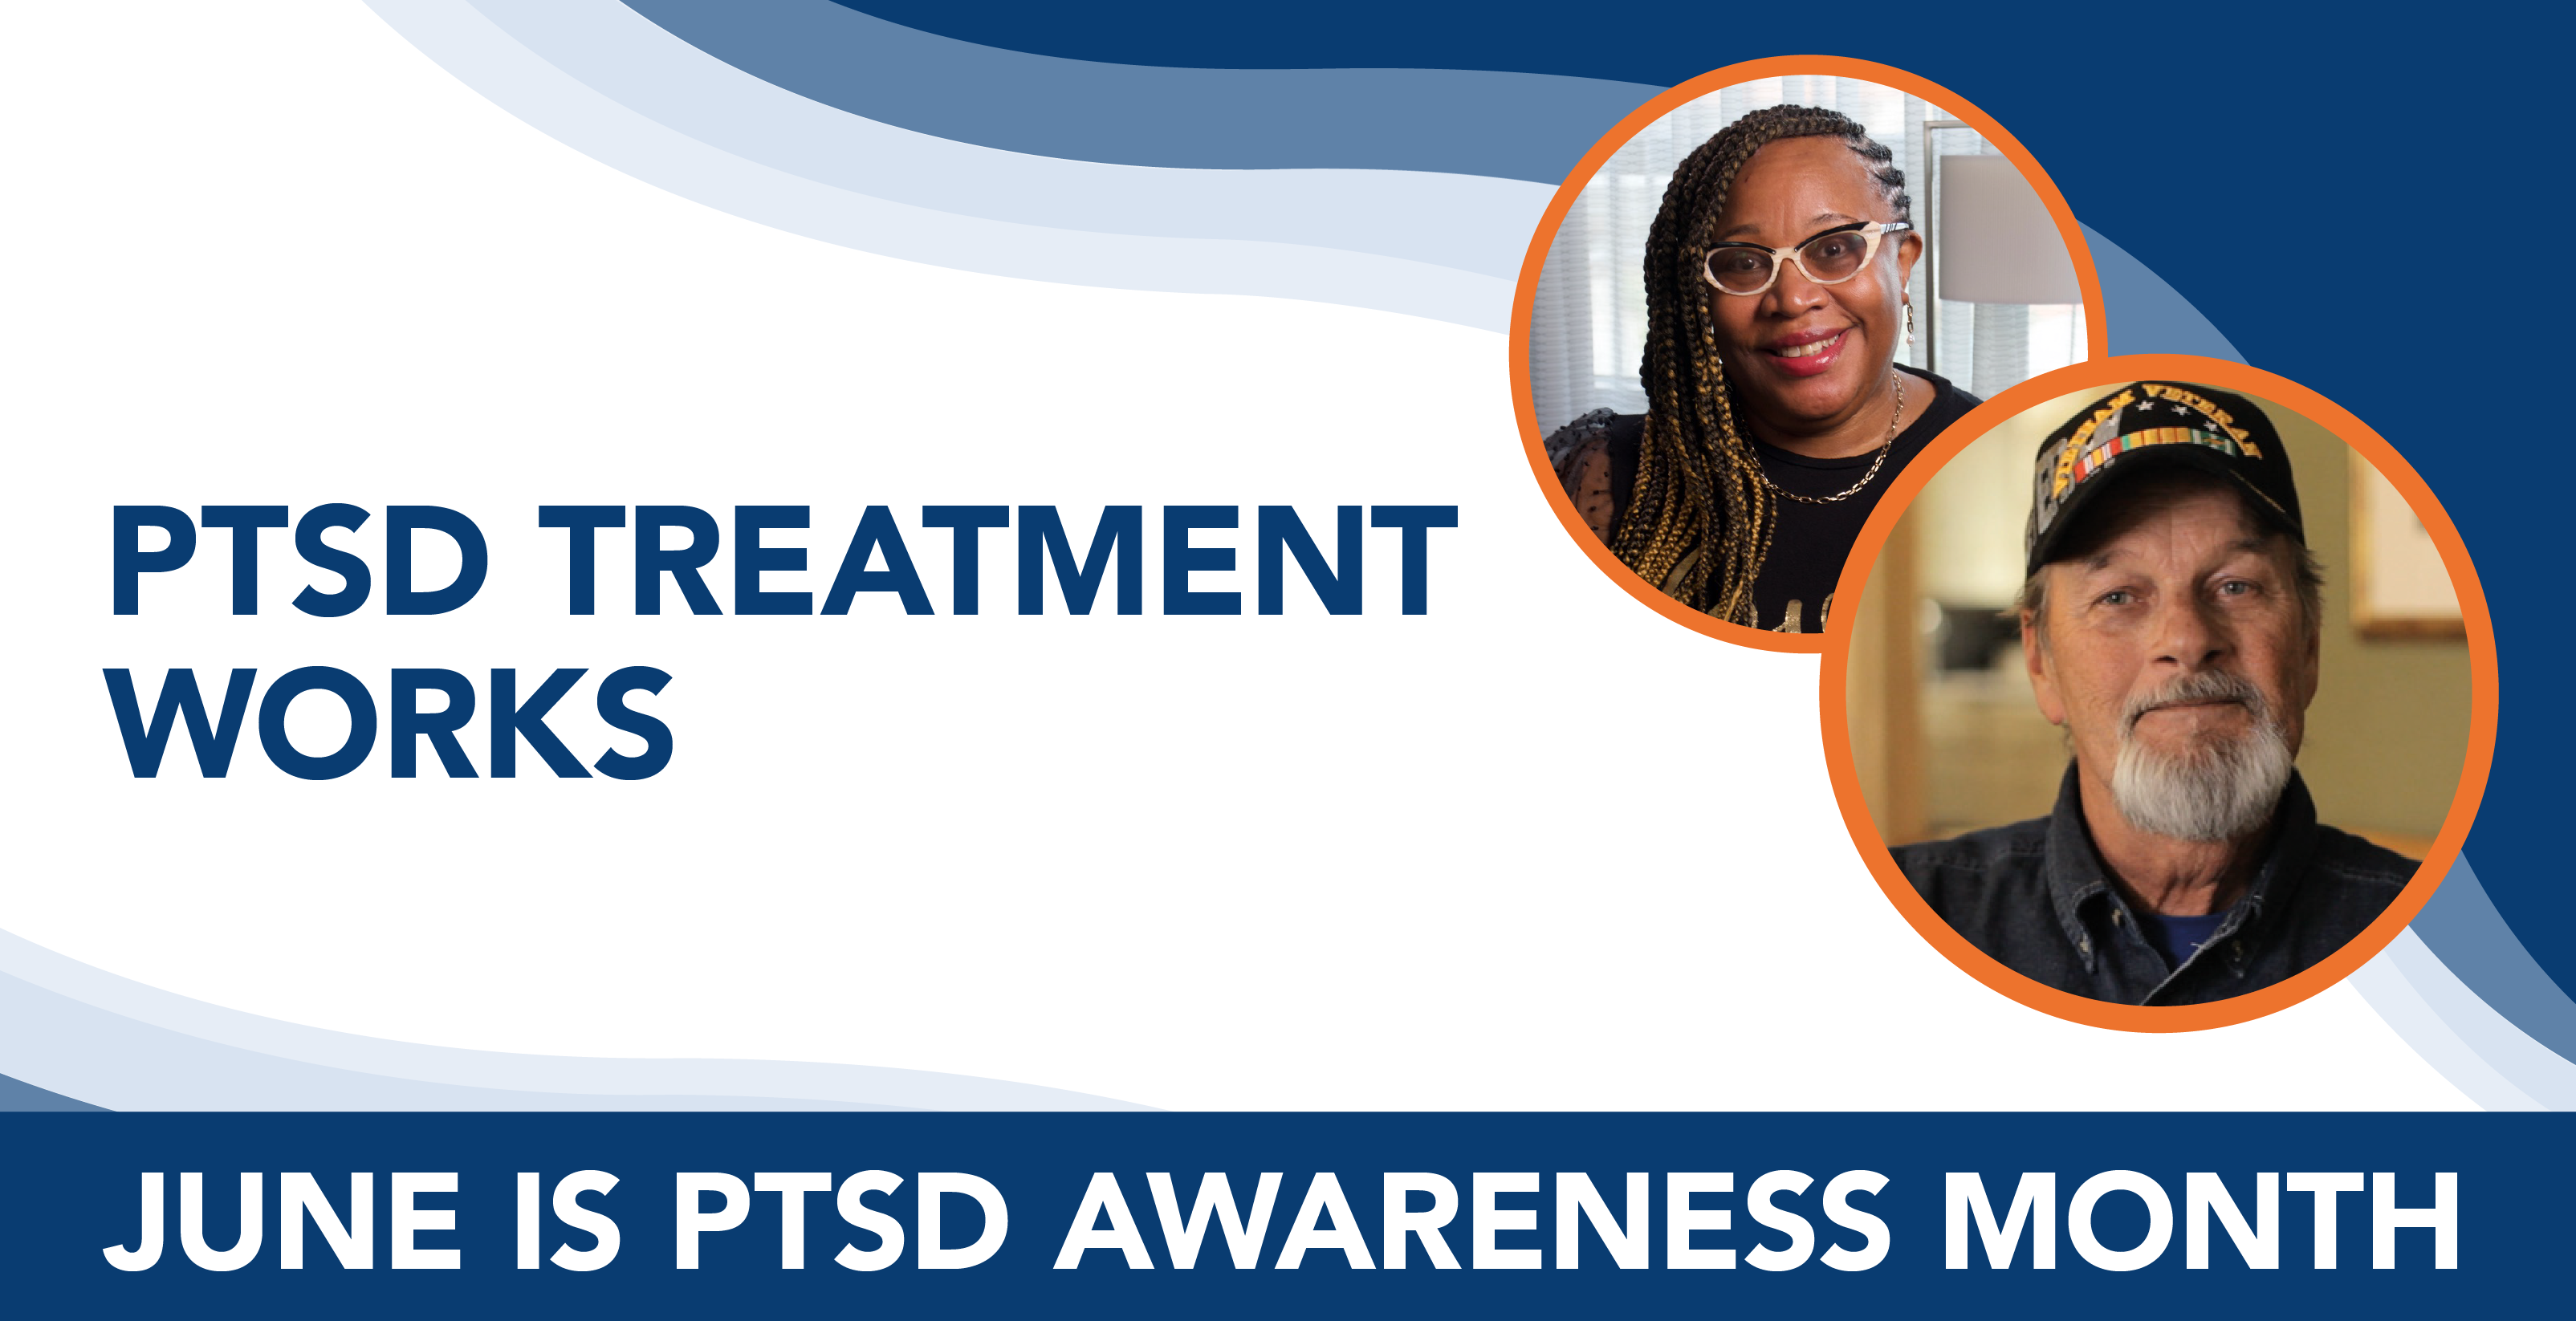 Learn. Connect. Share. Raise PTSD Awareness, June